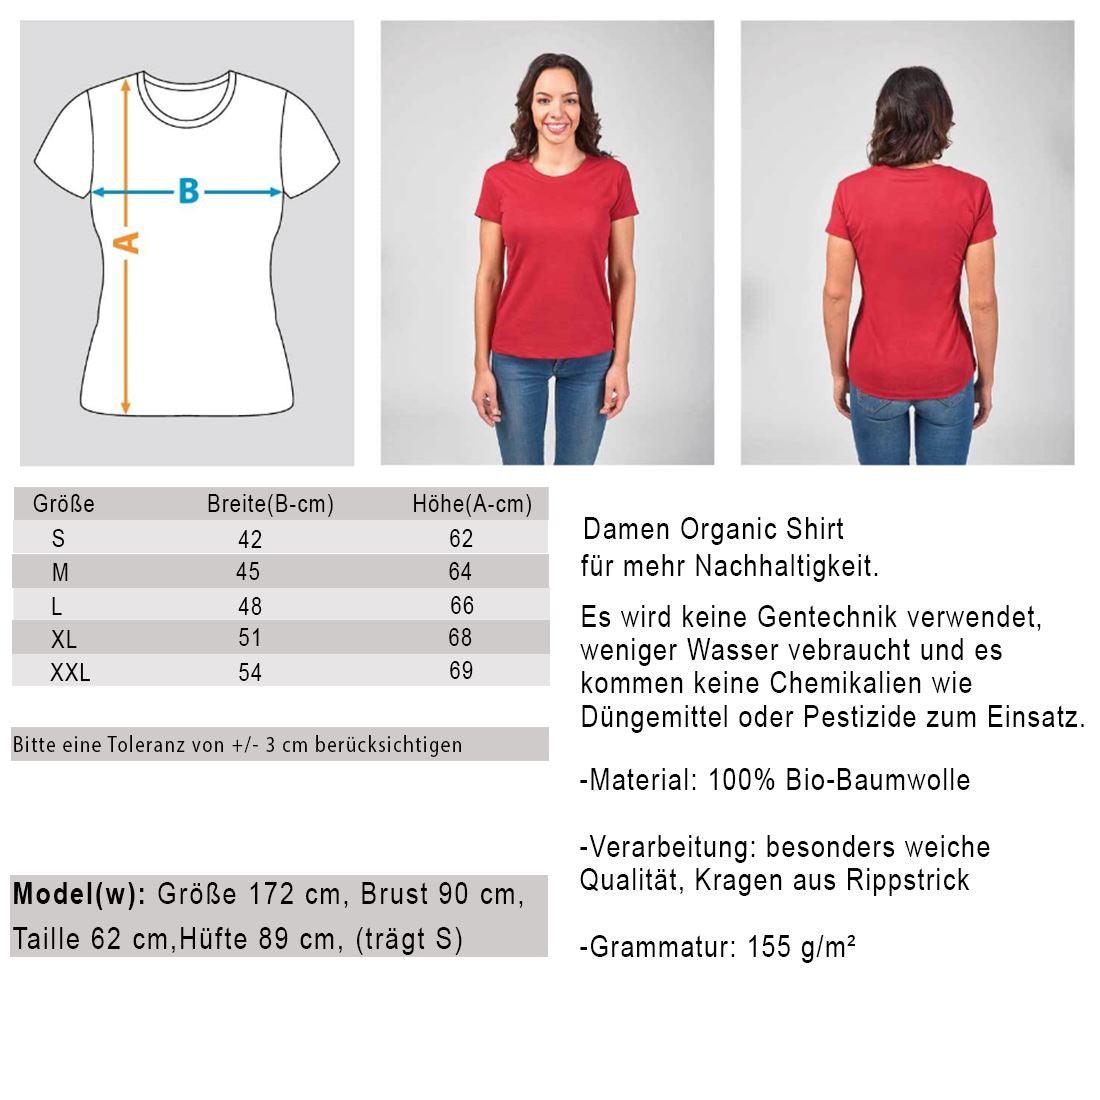 Nicht gleich aber gleichwertig - Damen Organic Shirt - Team Vegan © vegan t shirt